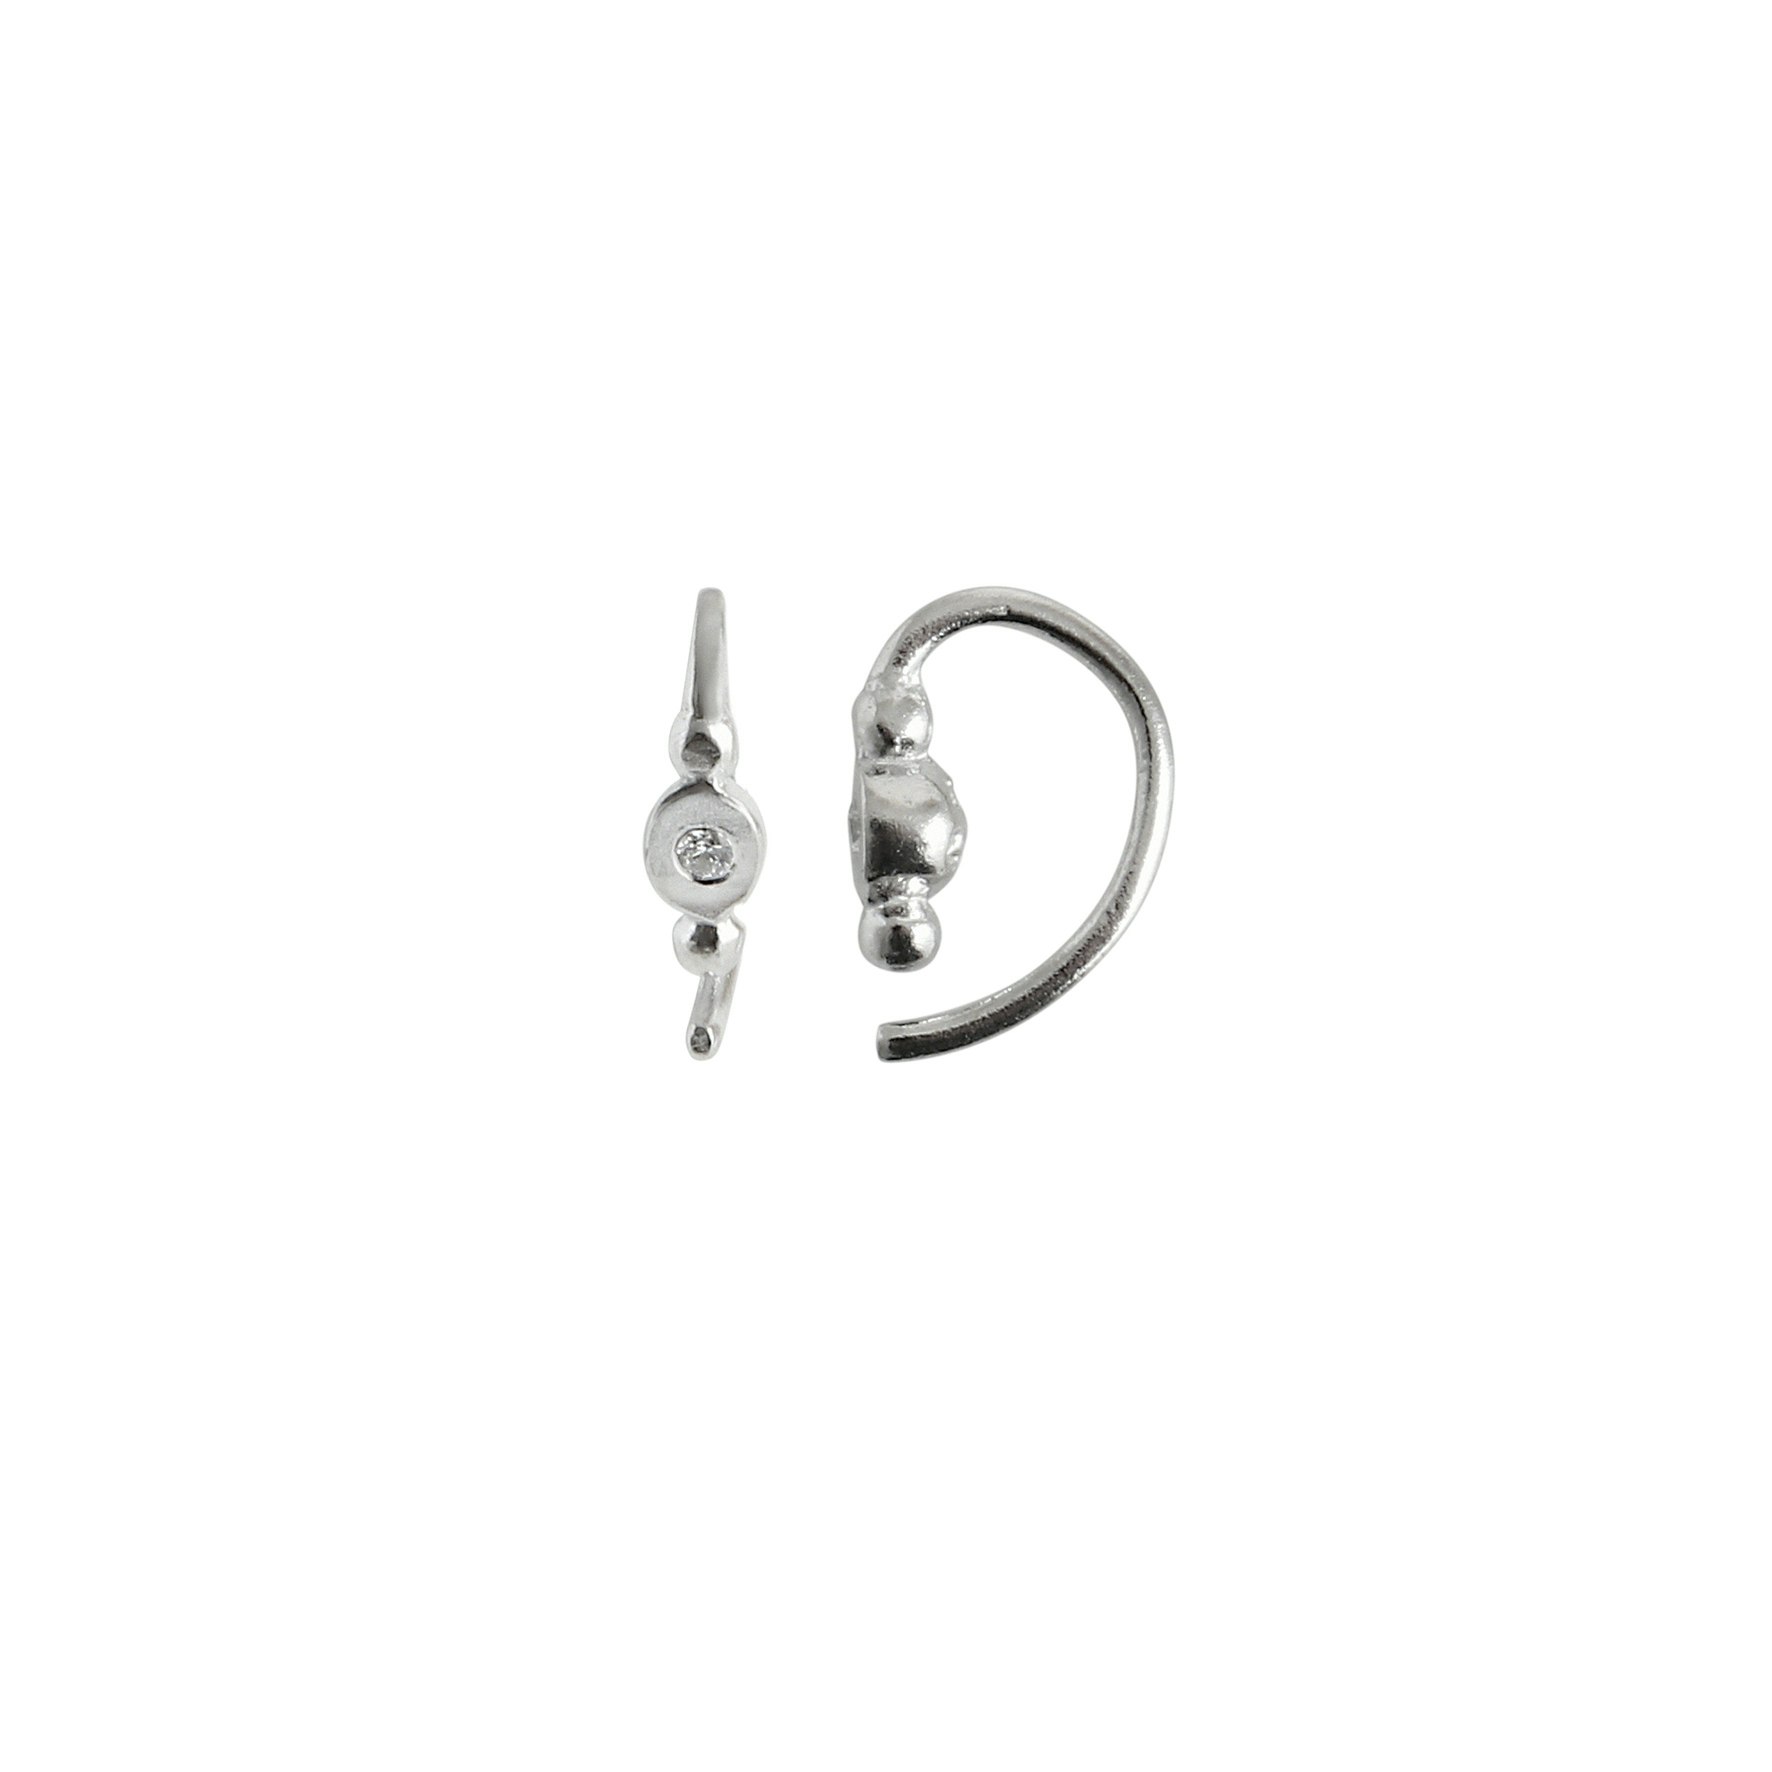 Petit Bon-Bon White Zircon Earring Piece fra STINE A Jewelry i Sølv Sterling 925